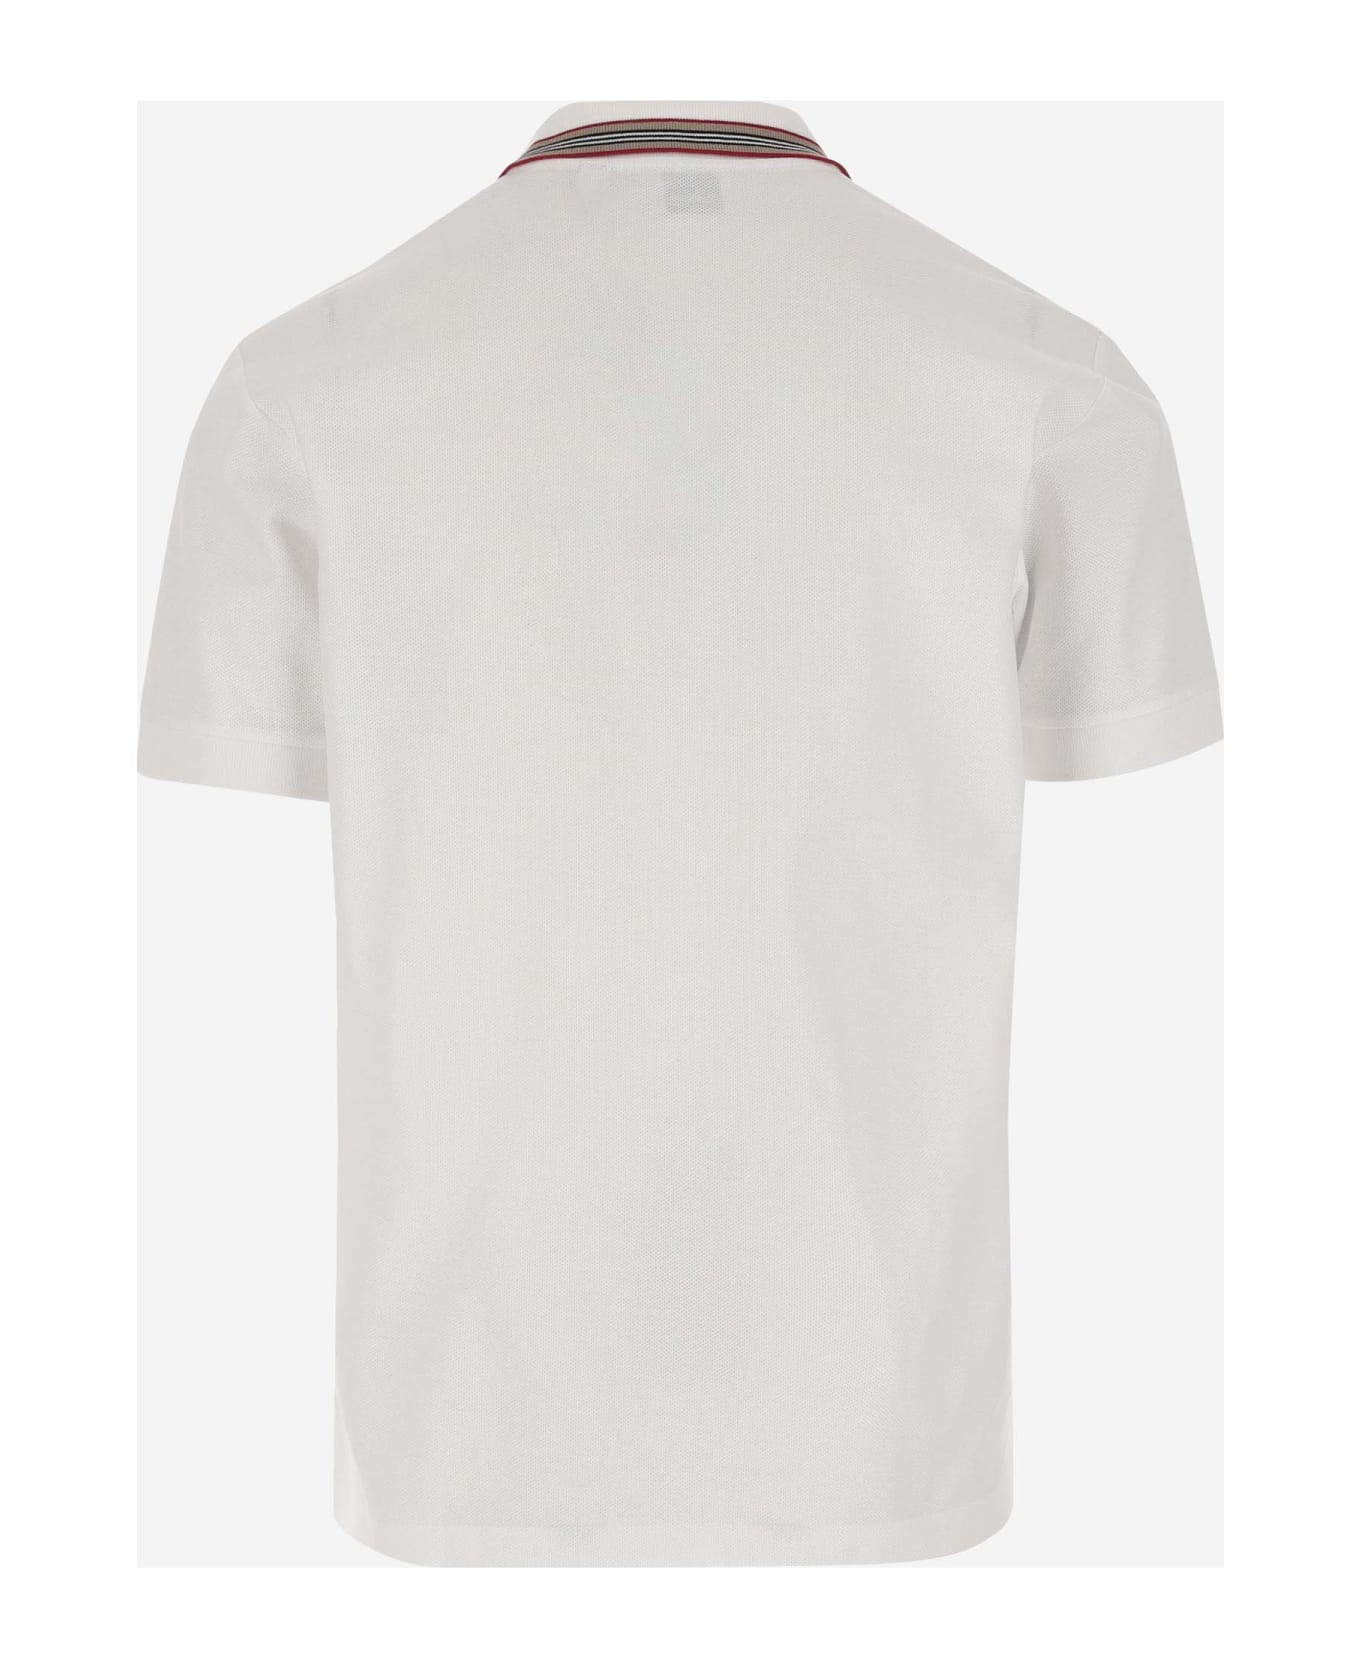 Burberry Cotton Pique Polo Shirt - White ポロシャツ